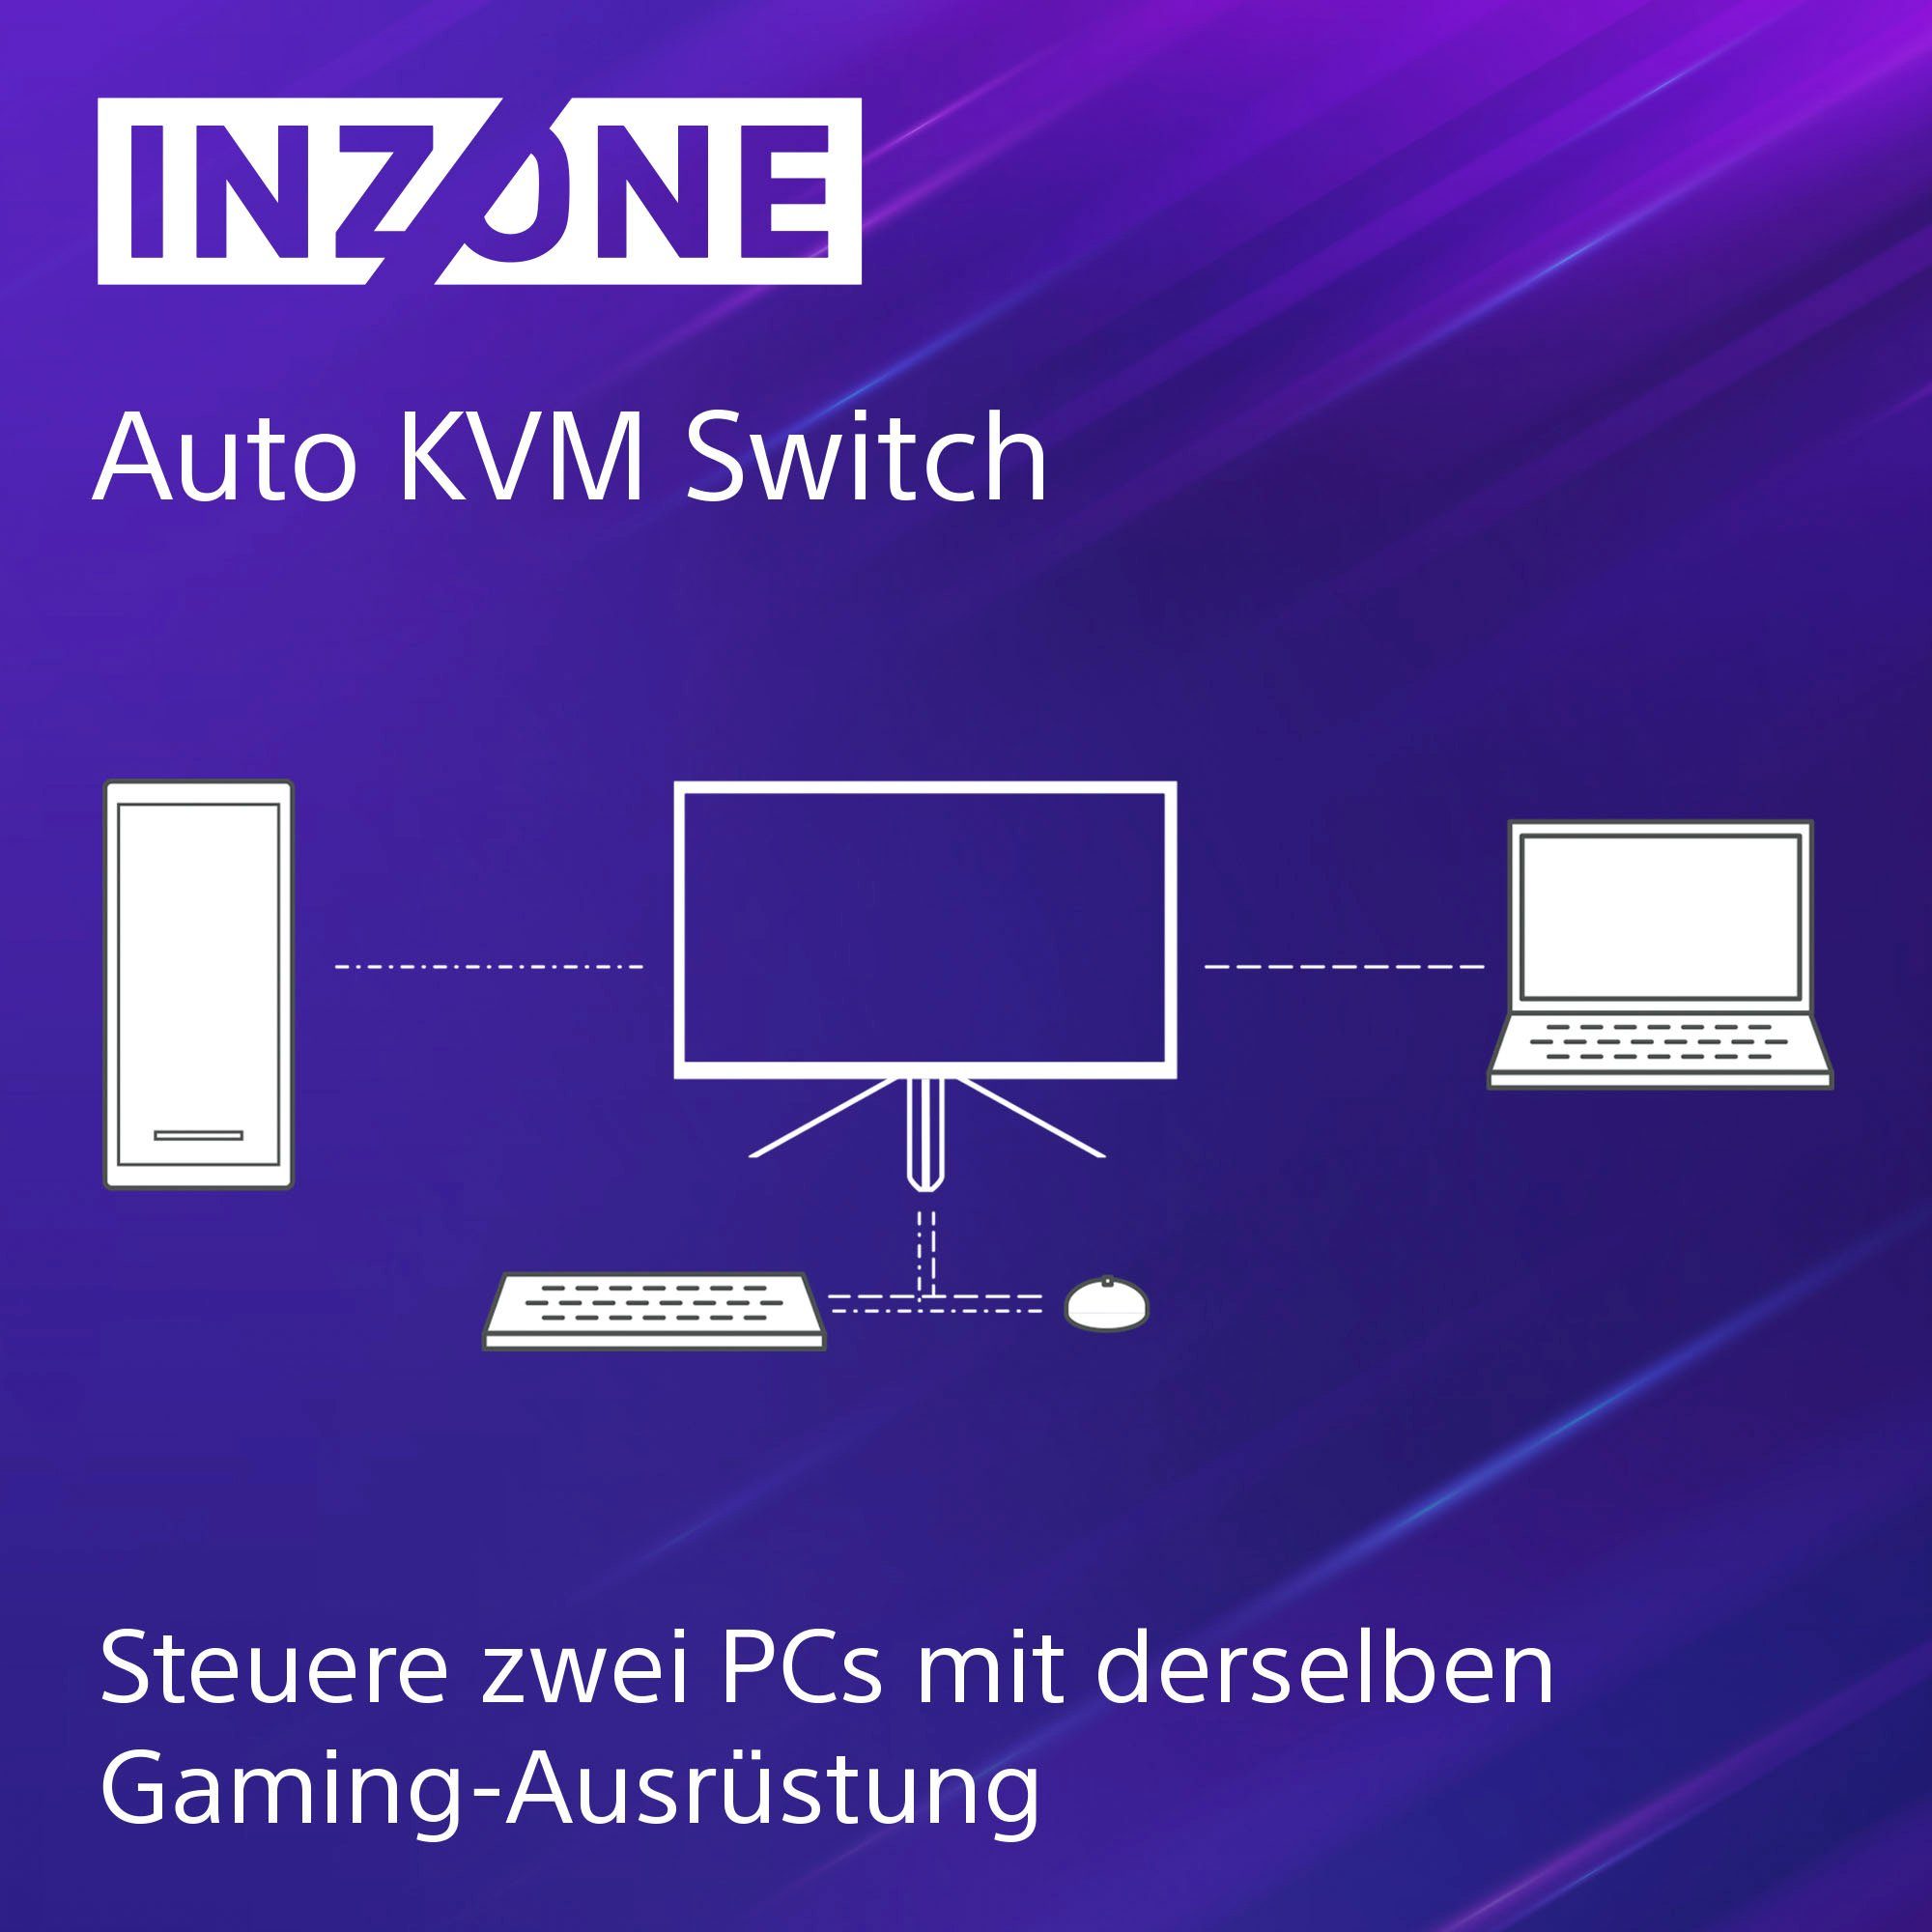 INZONE 1 IPS-LCD, ", M3 1080 cm/27 Hz, px, Reaktionszeit, Sony für ms 1920 Gaming-Monitor 240 Perfekt PlayStation®5) (69 Full HD, x